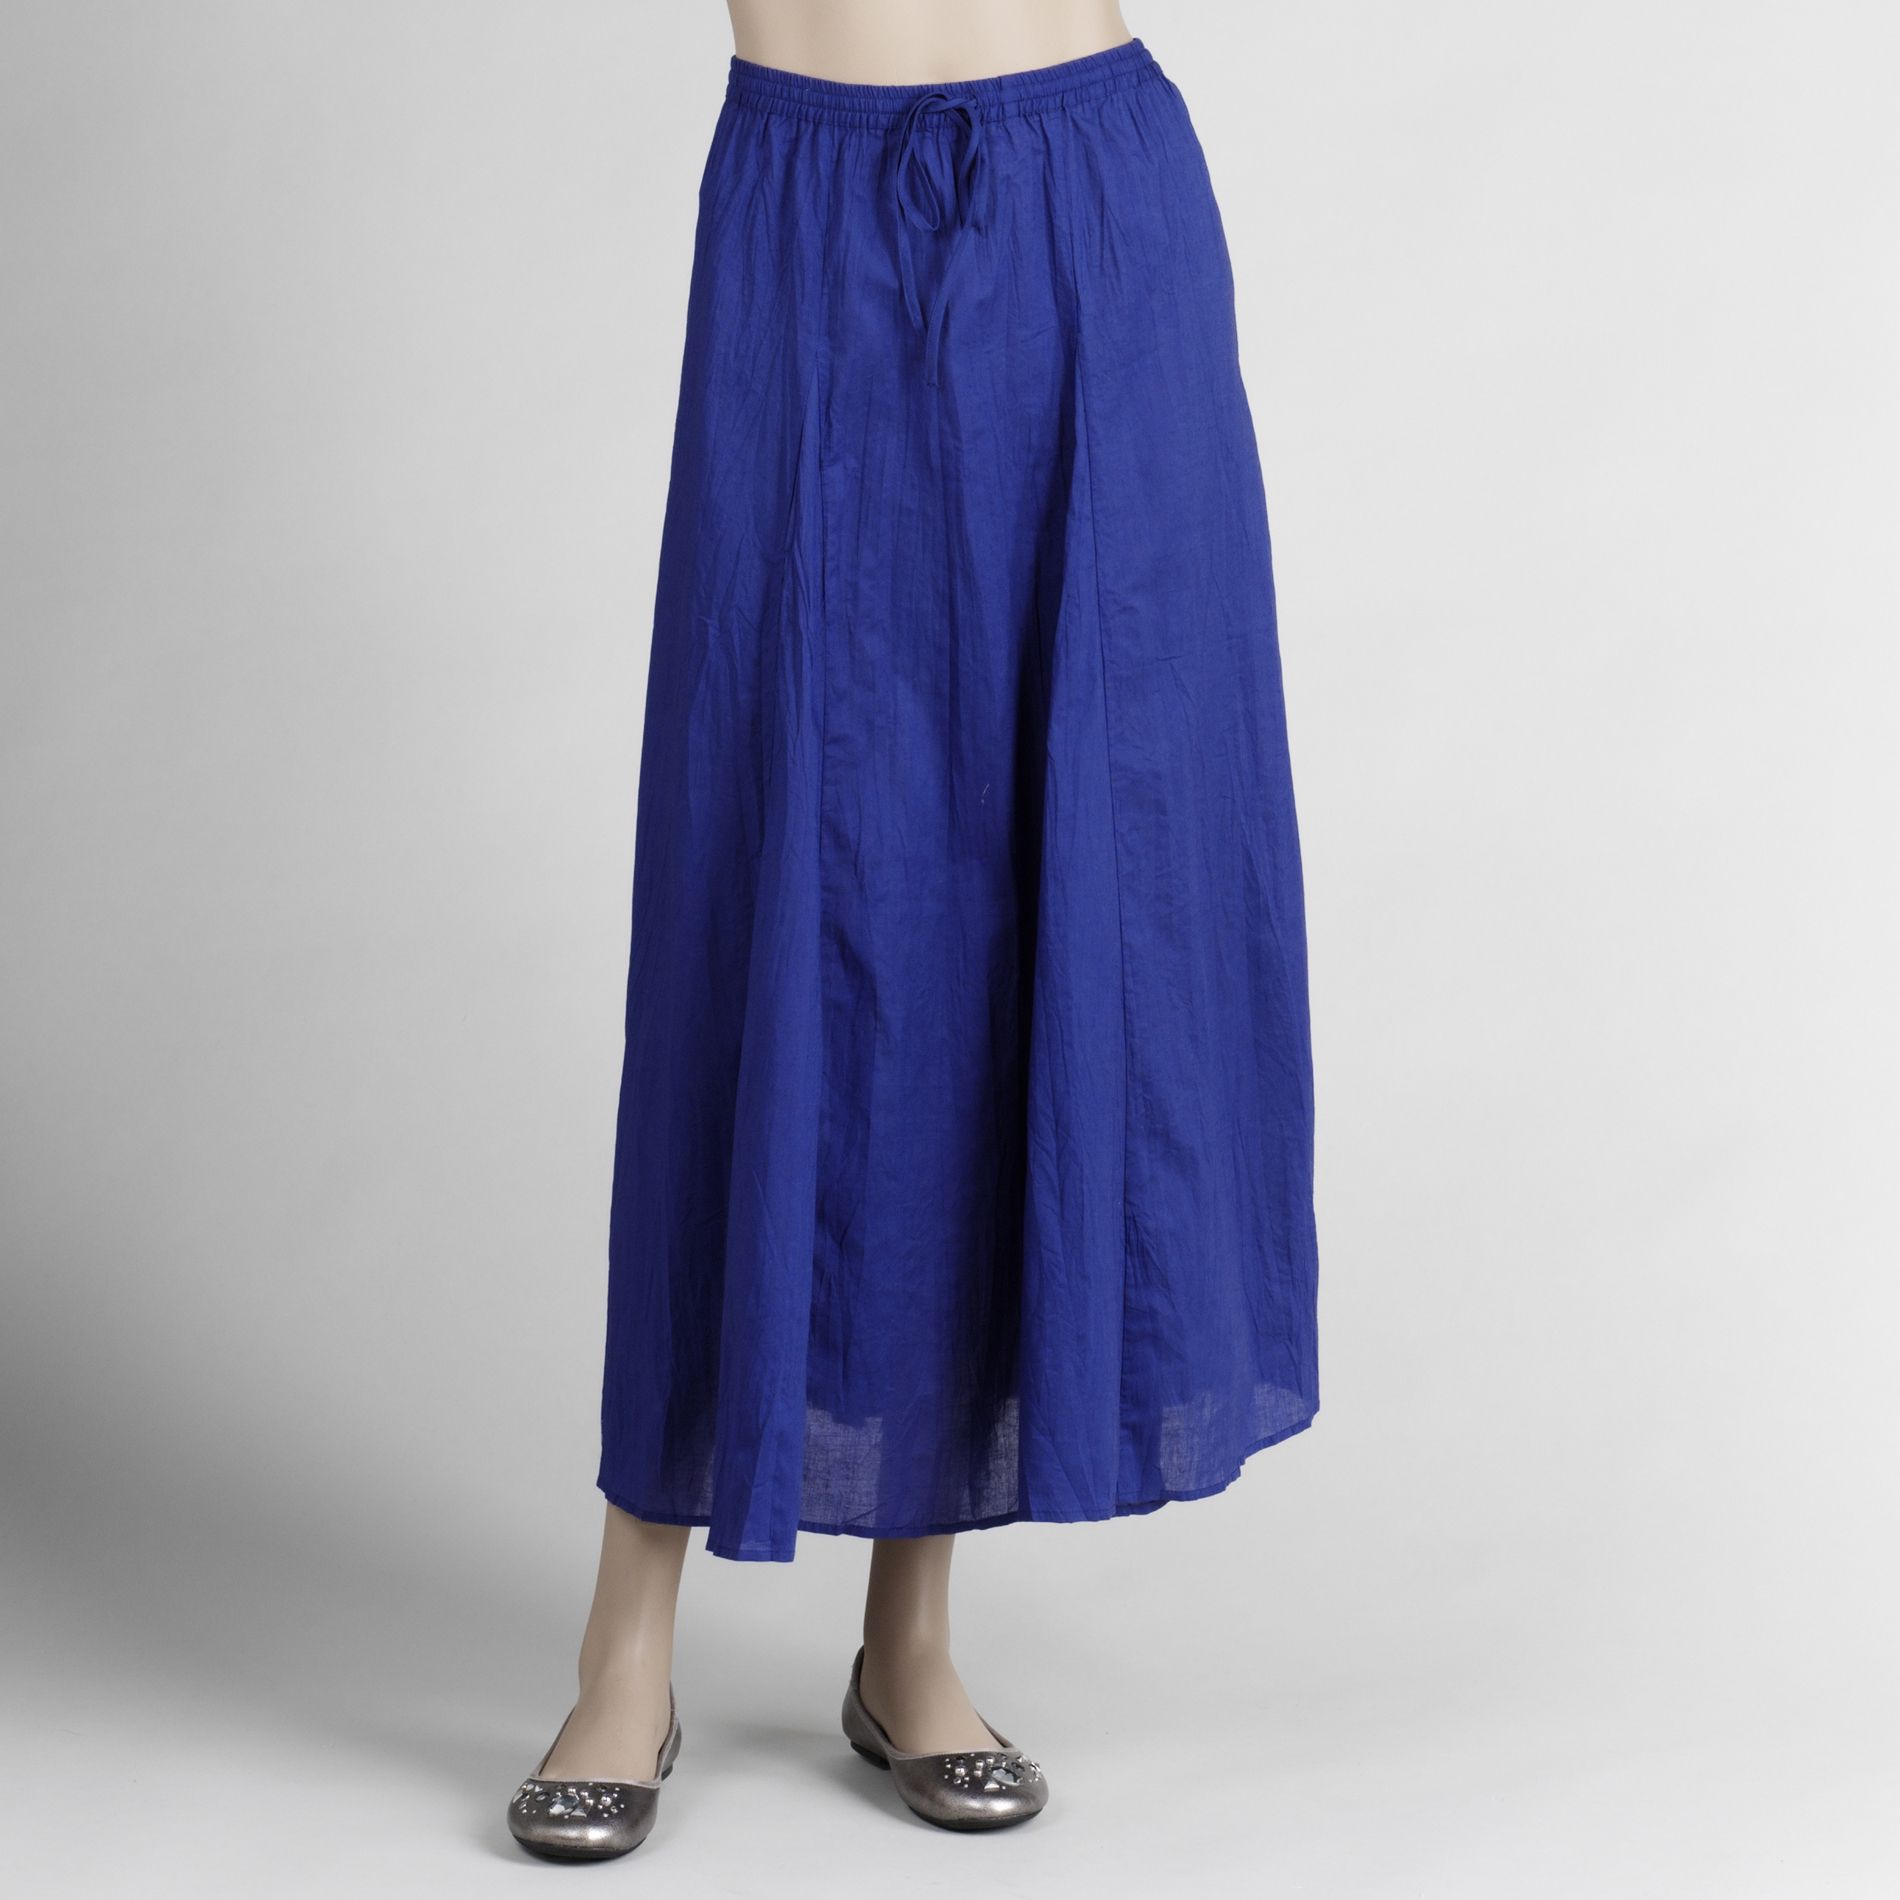 Jaclyn Smith Women's Solid Crinkle Skirt